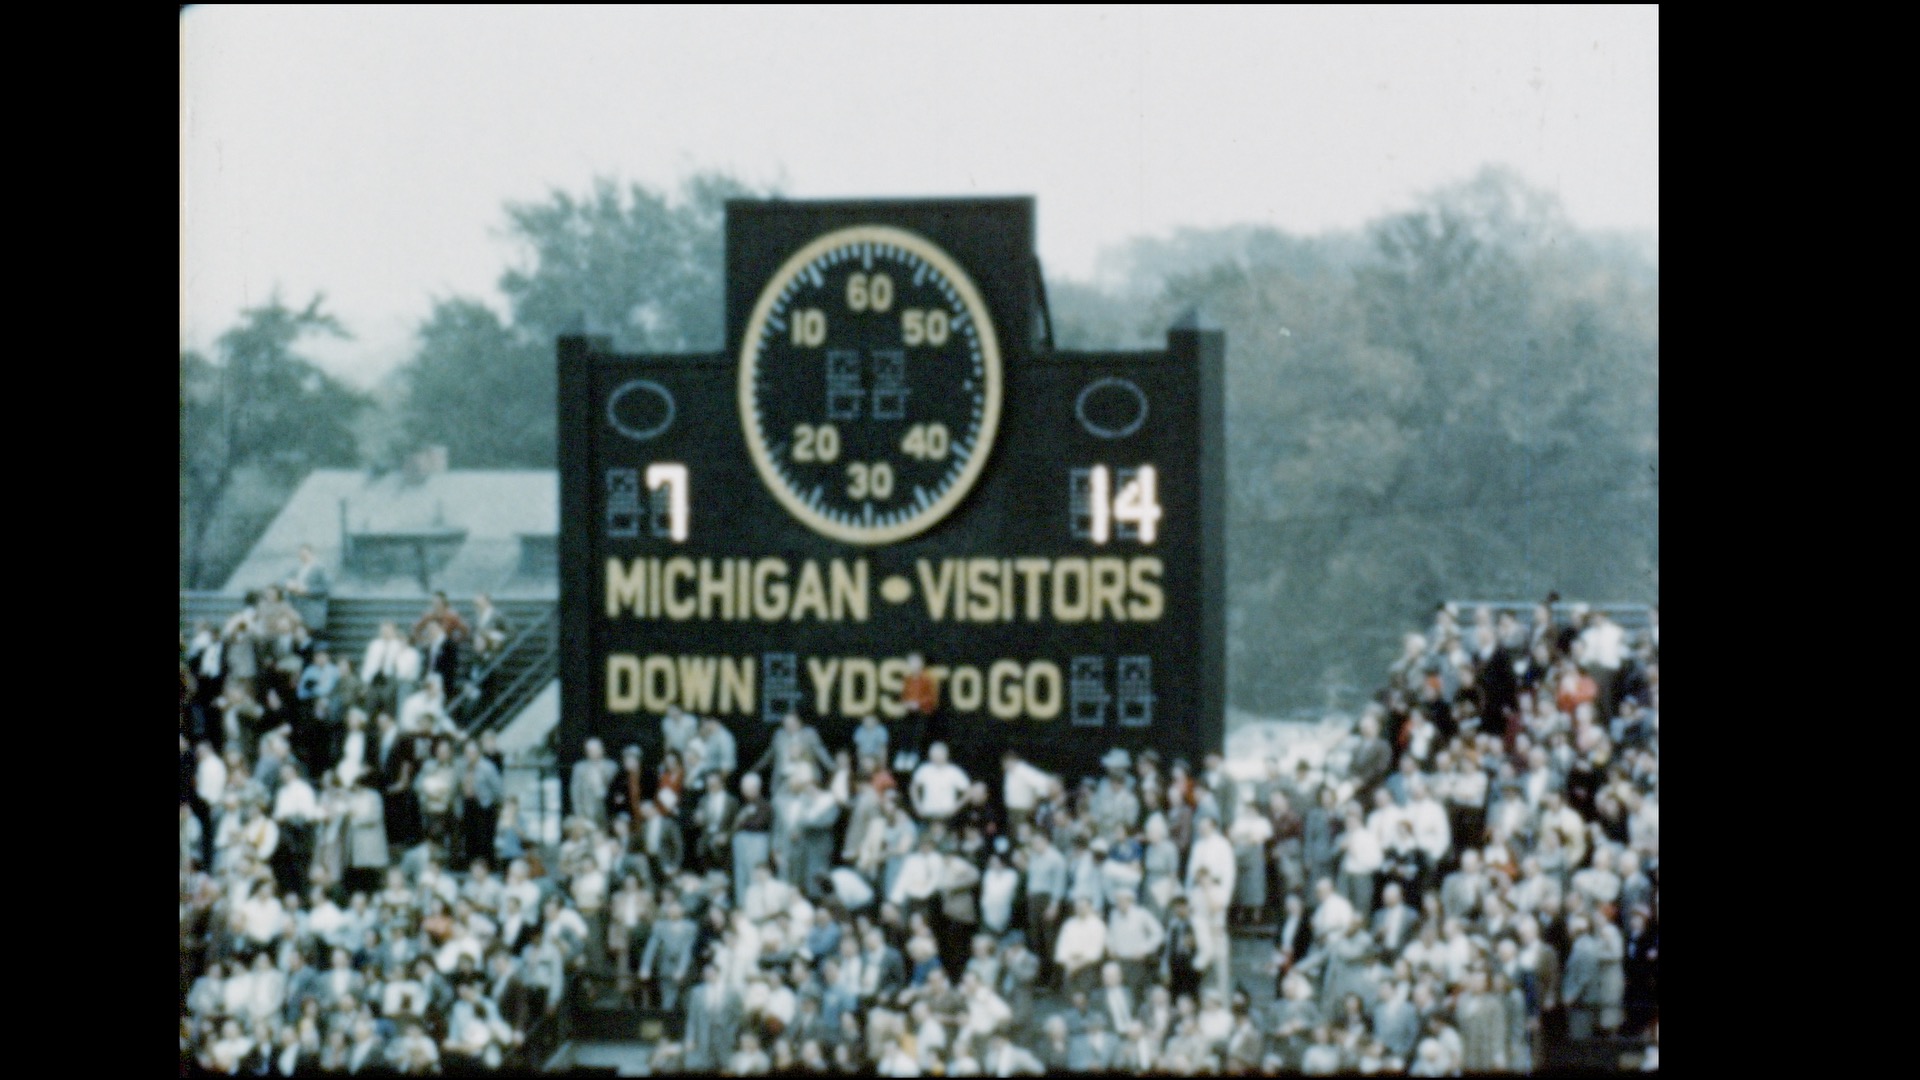 MSC Football vs. Michigan, 1950